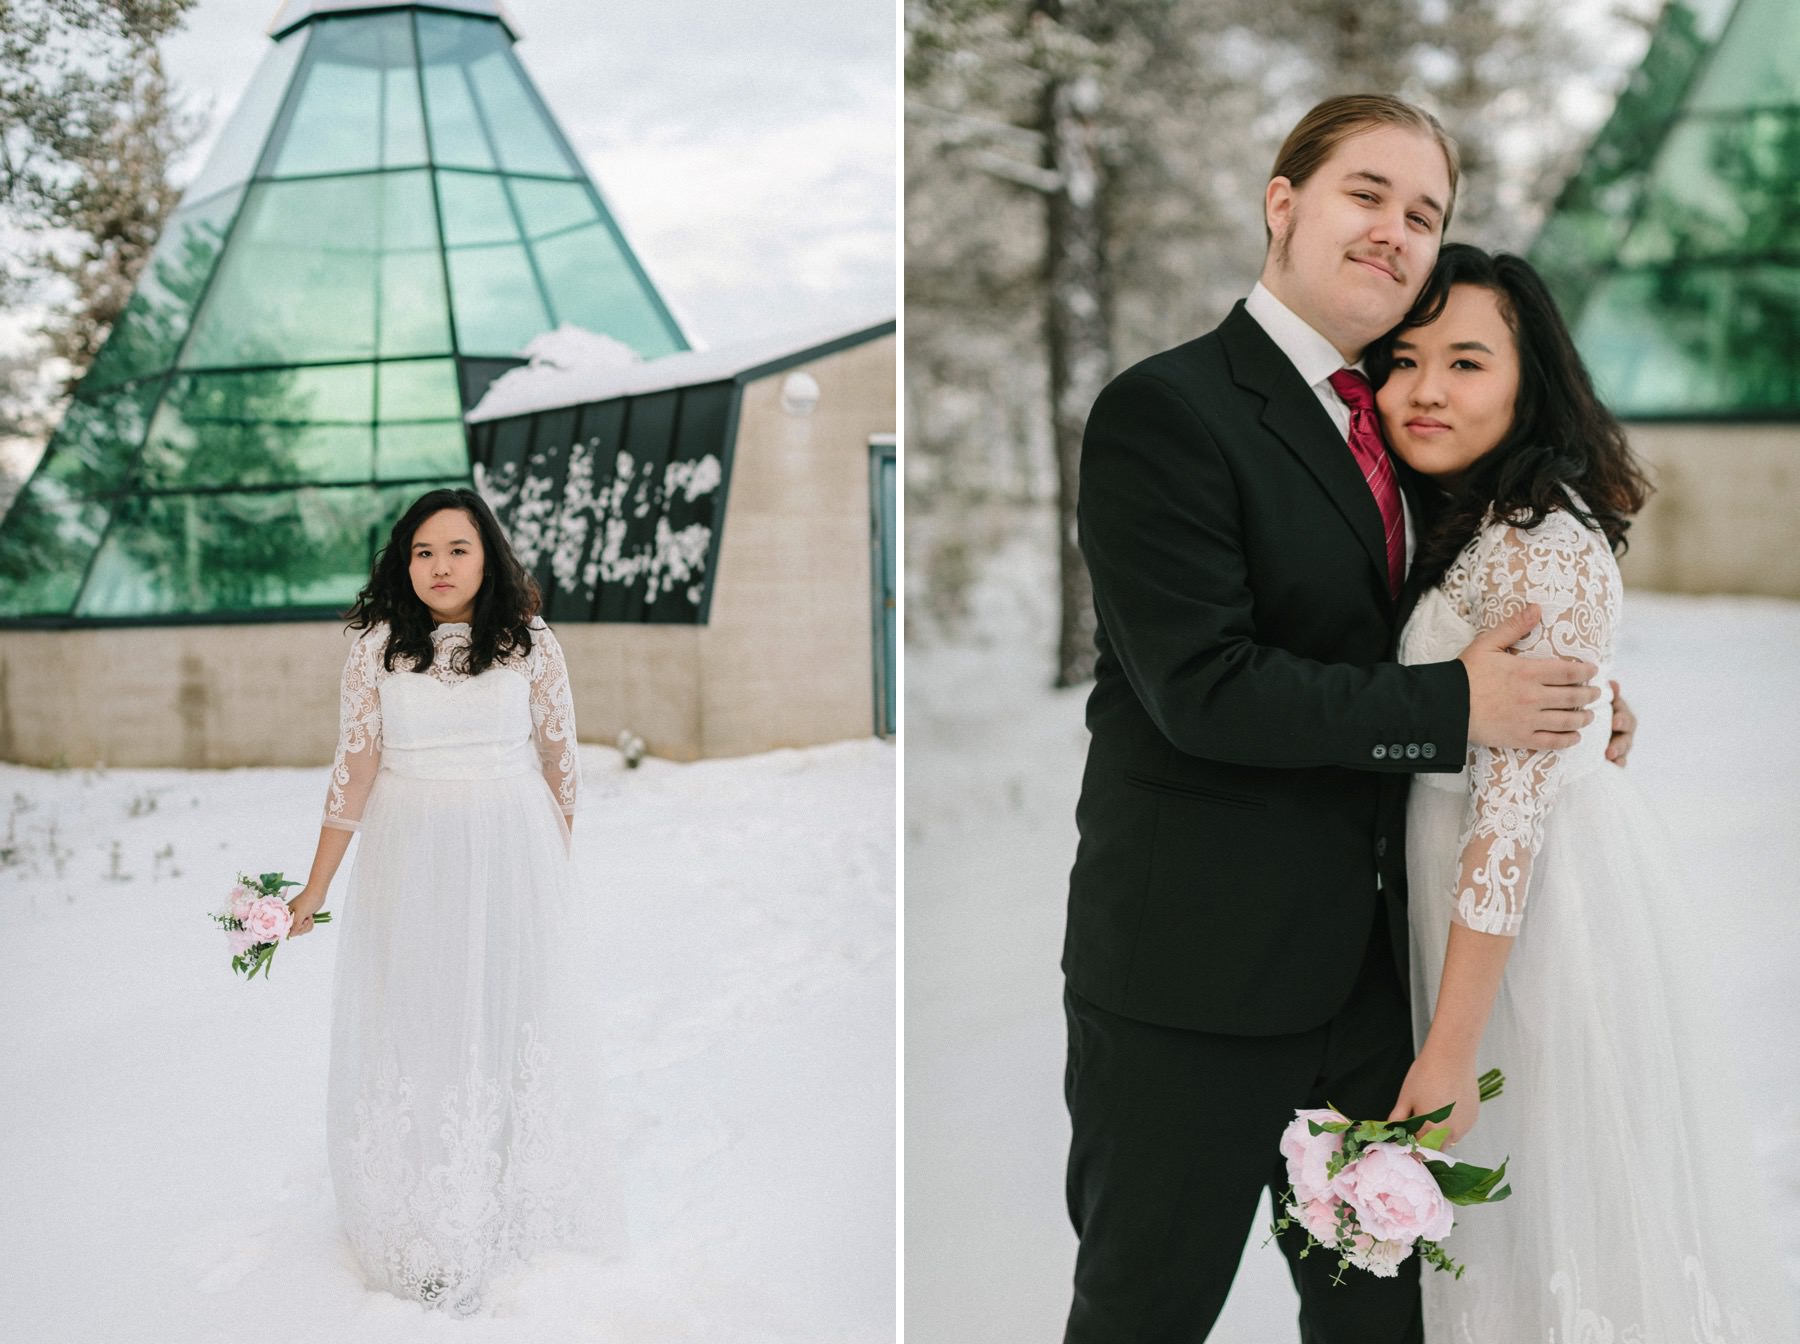 getting married at Kakslauttanen Arctic Resort glass tepee